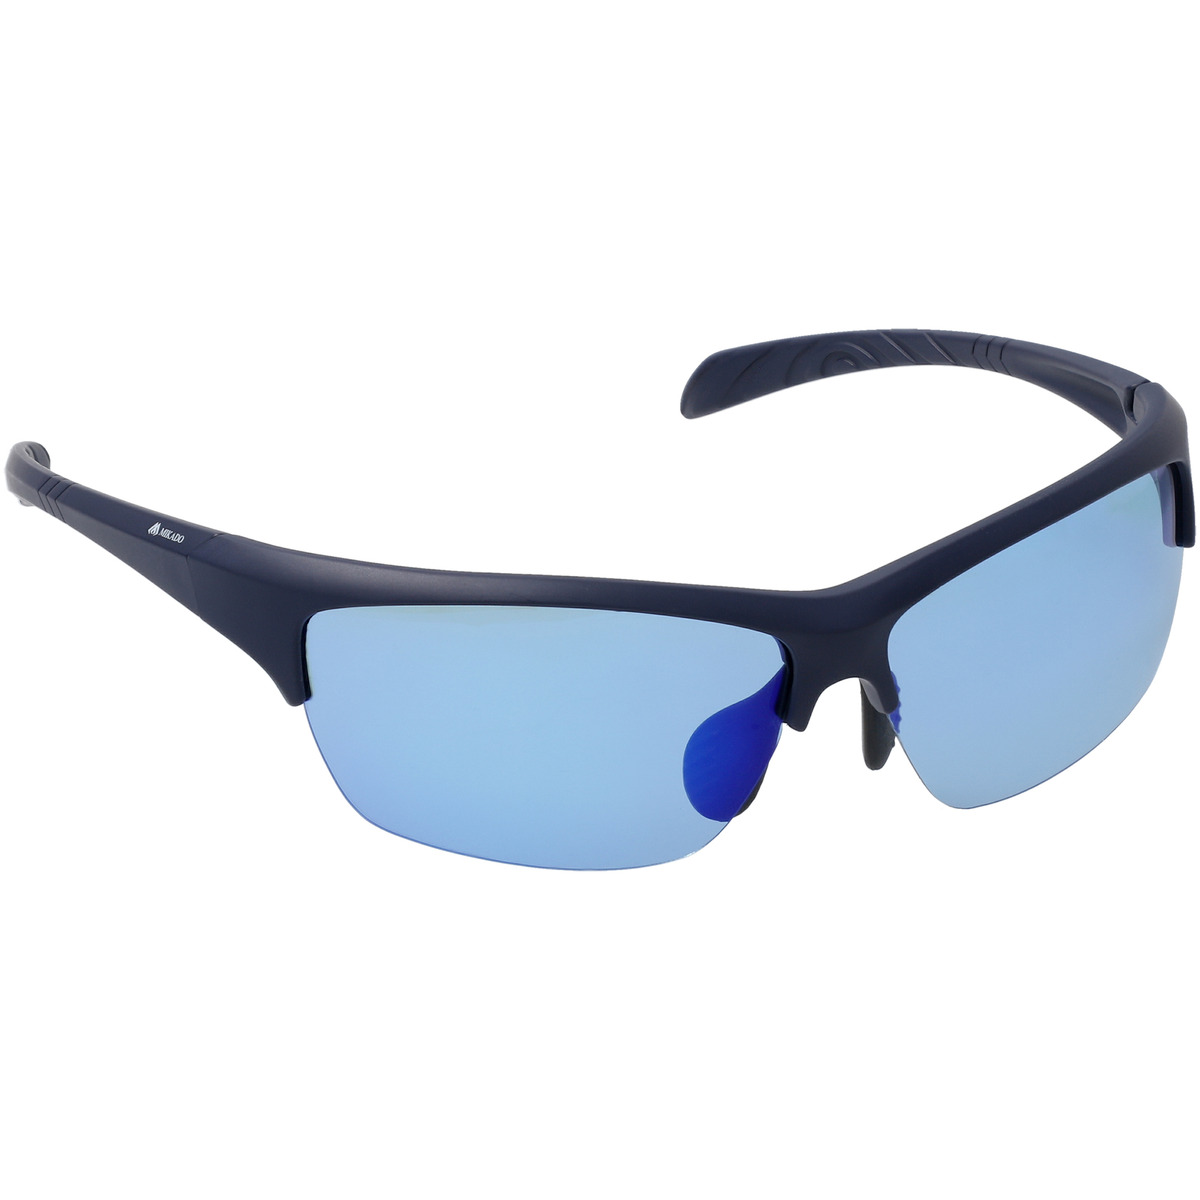 Mikado Sunglasses Polarized - 23 BLUE AND PURPLE MIRROR EFFECT